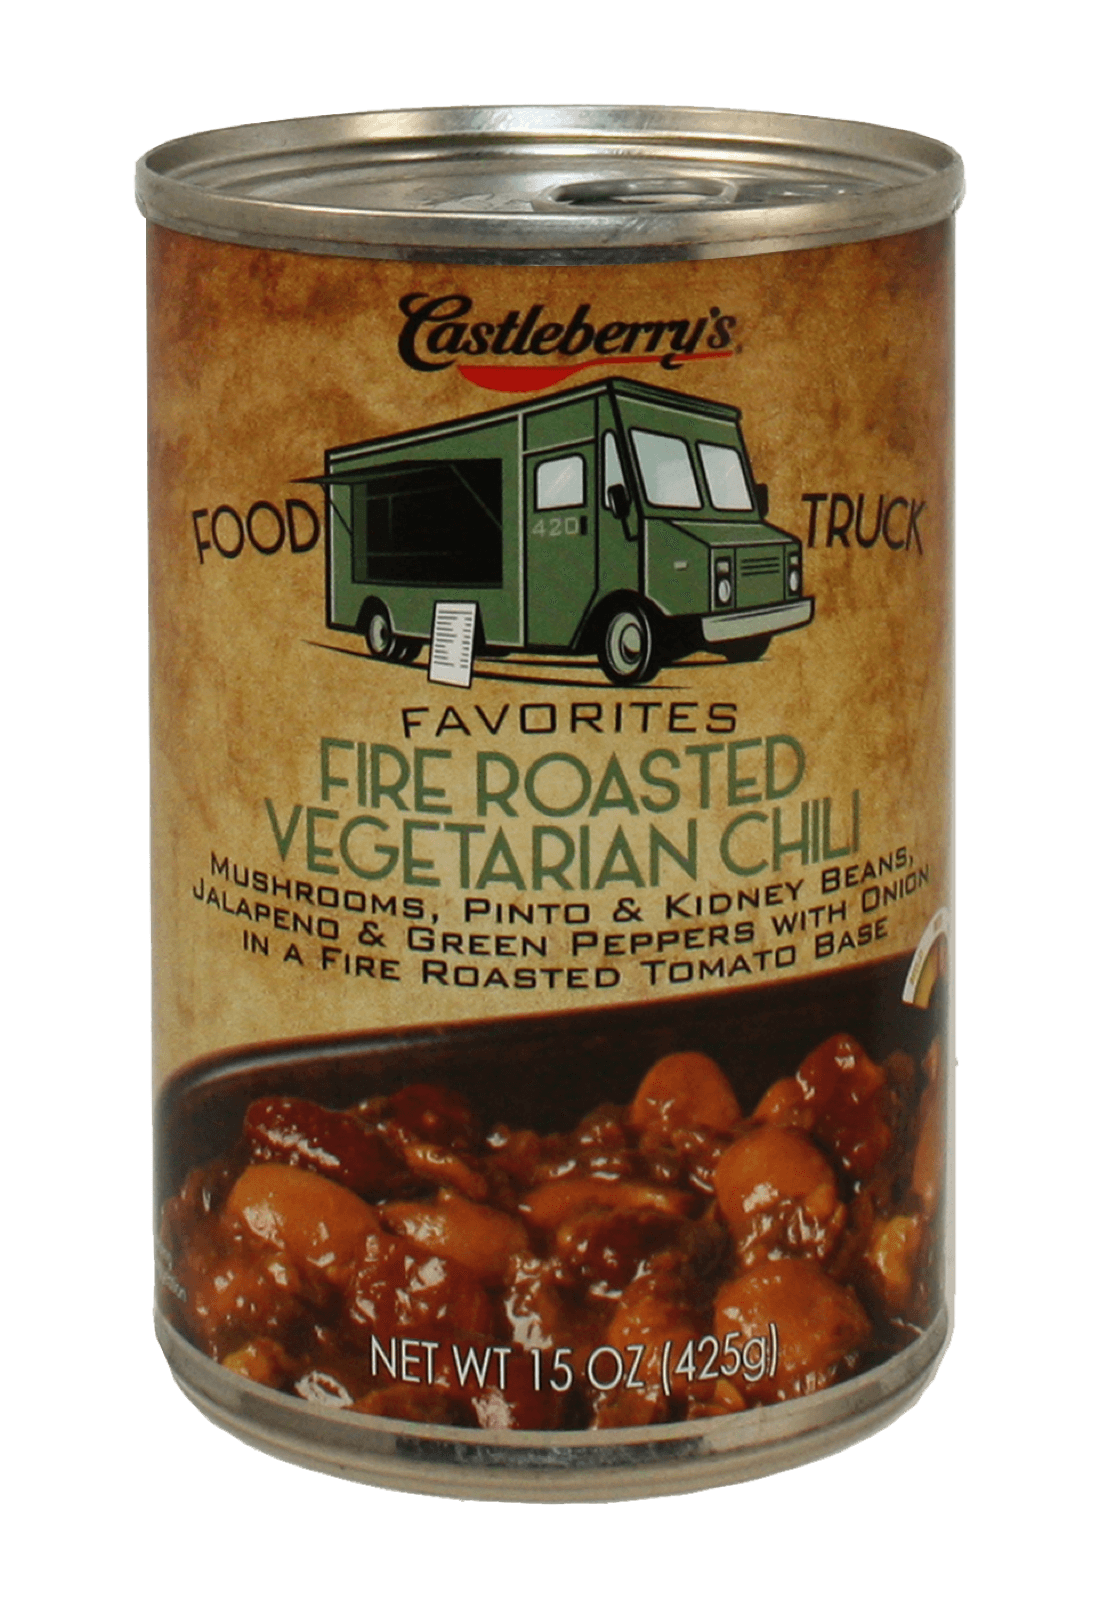 Castleberry's Food Truck Favorites Fire Roasted Vegetarian Chili 15oz 30300-07381-7 image (1)